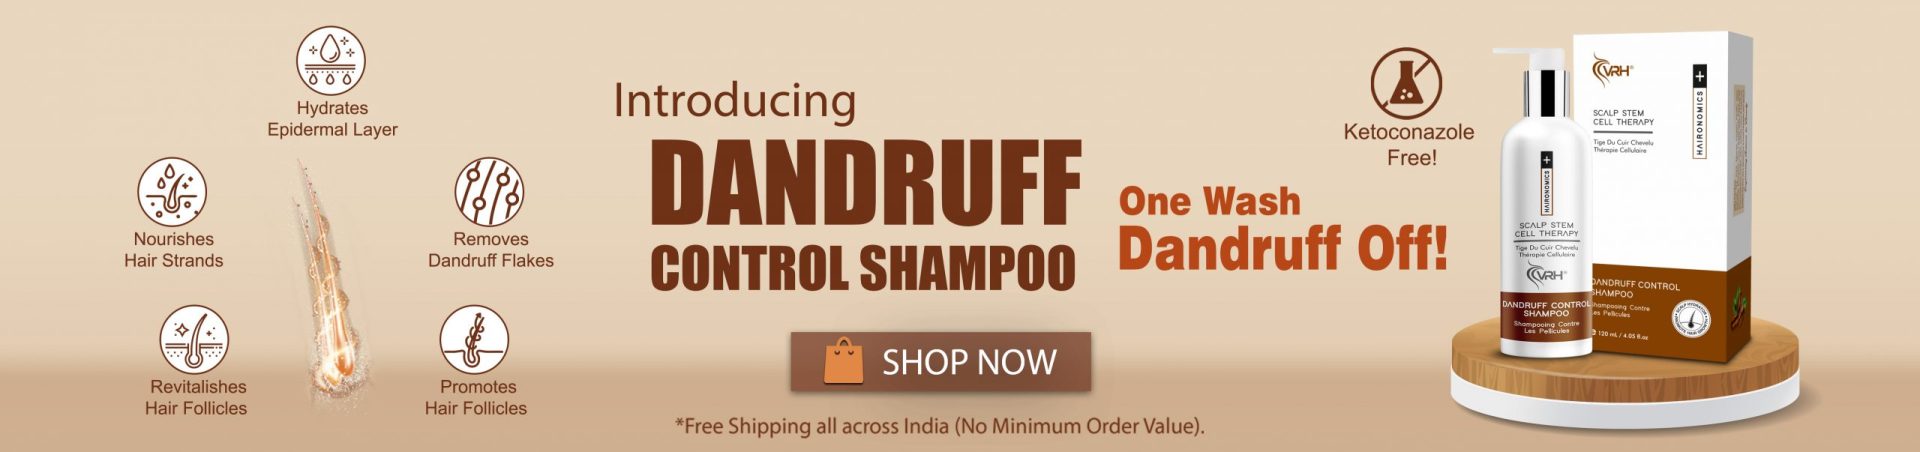 vrh dandruff control shampoo wallpaper 2